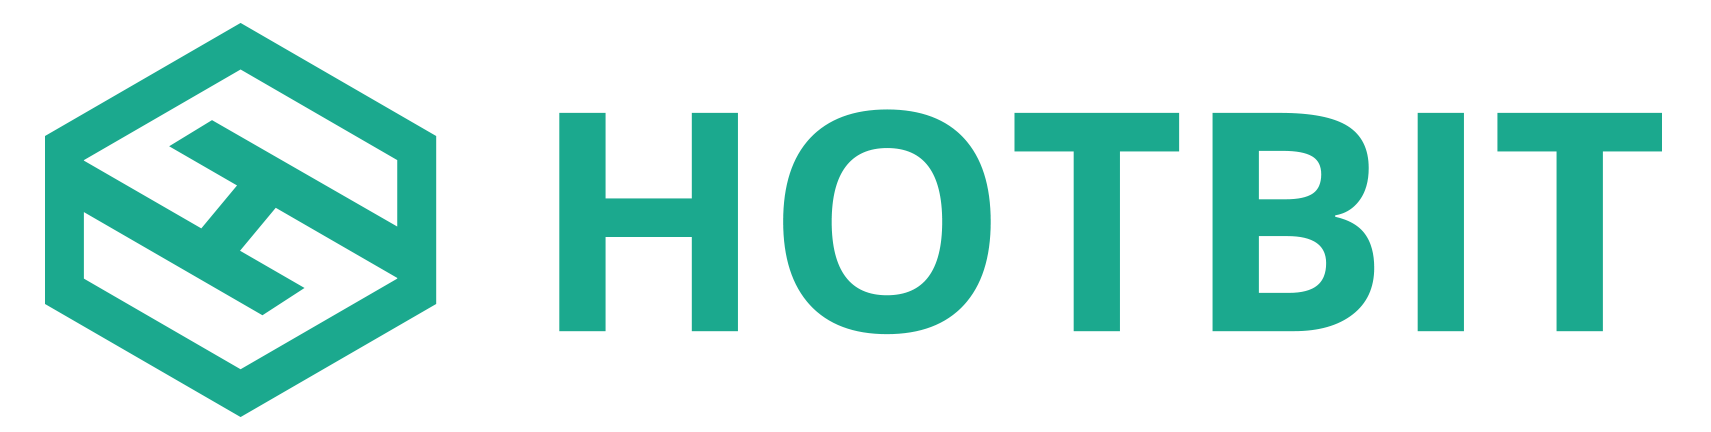 File:Hotbit.Png - Wikimedia Commons